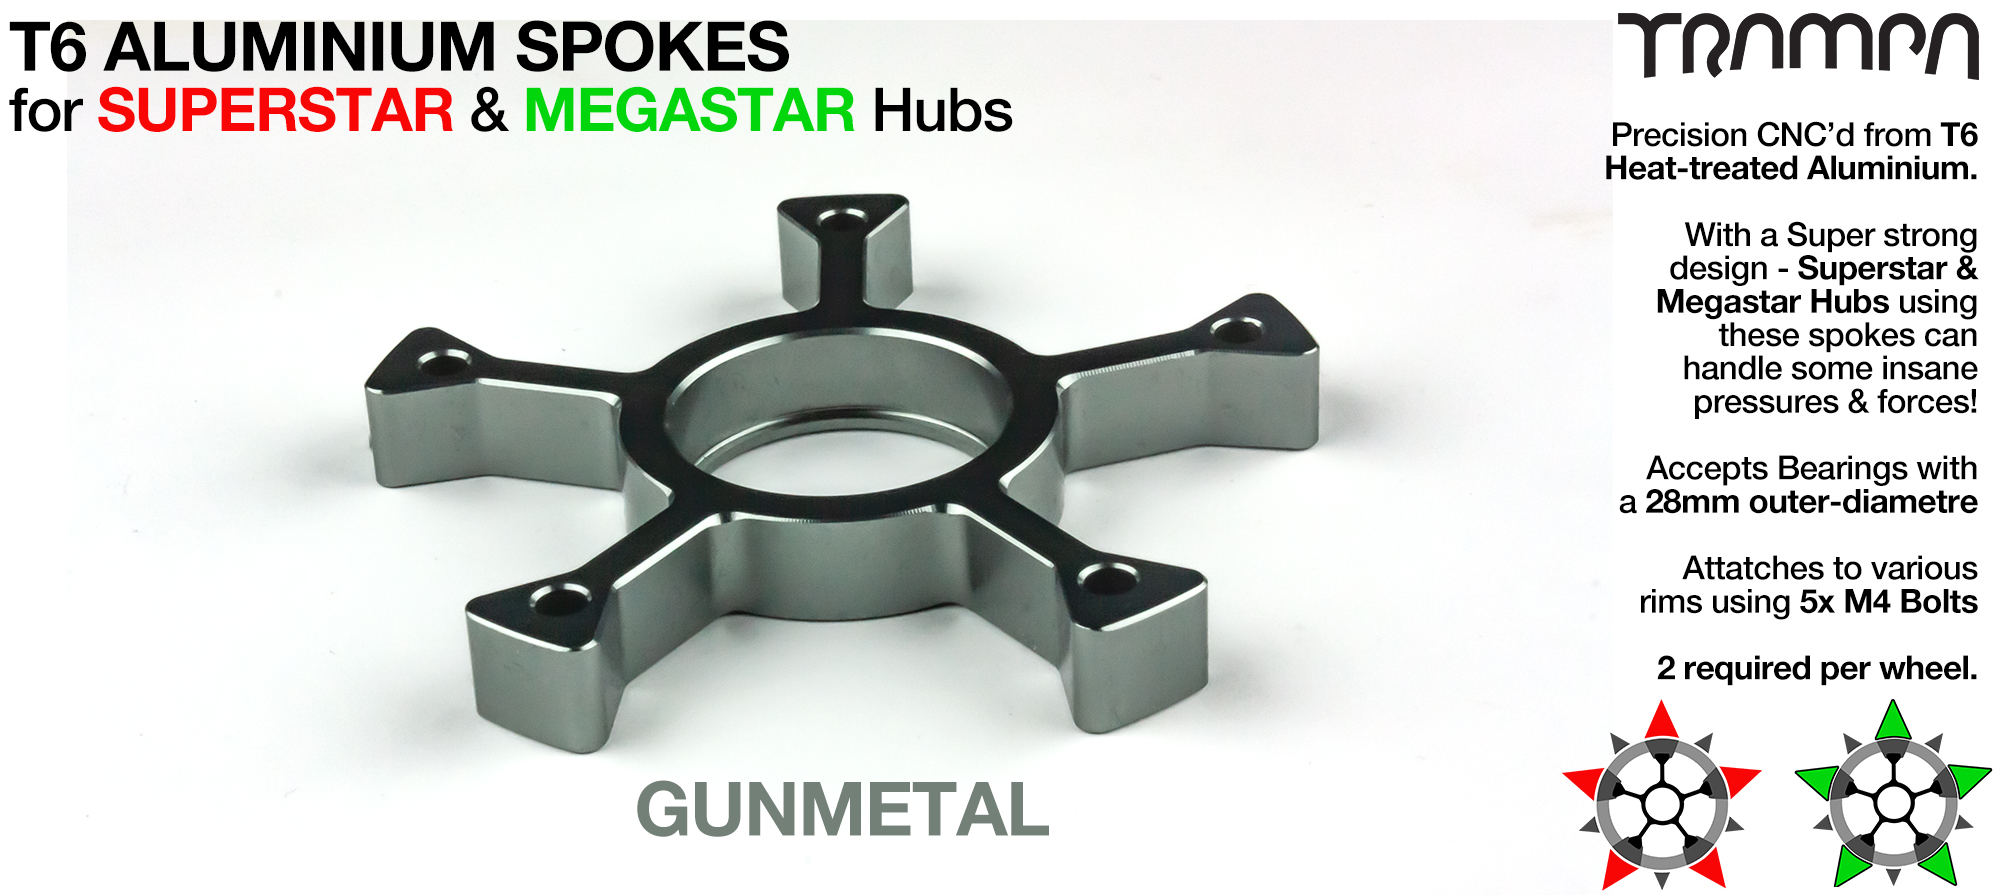 GUNMETAL Anodised CLASSIC 5 SPOKE - Extruded T6 Aluminum Heat treated & CNC Precision milled fits all SUPERSTAR & MEGASTAR Wheels